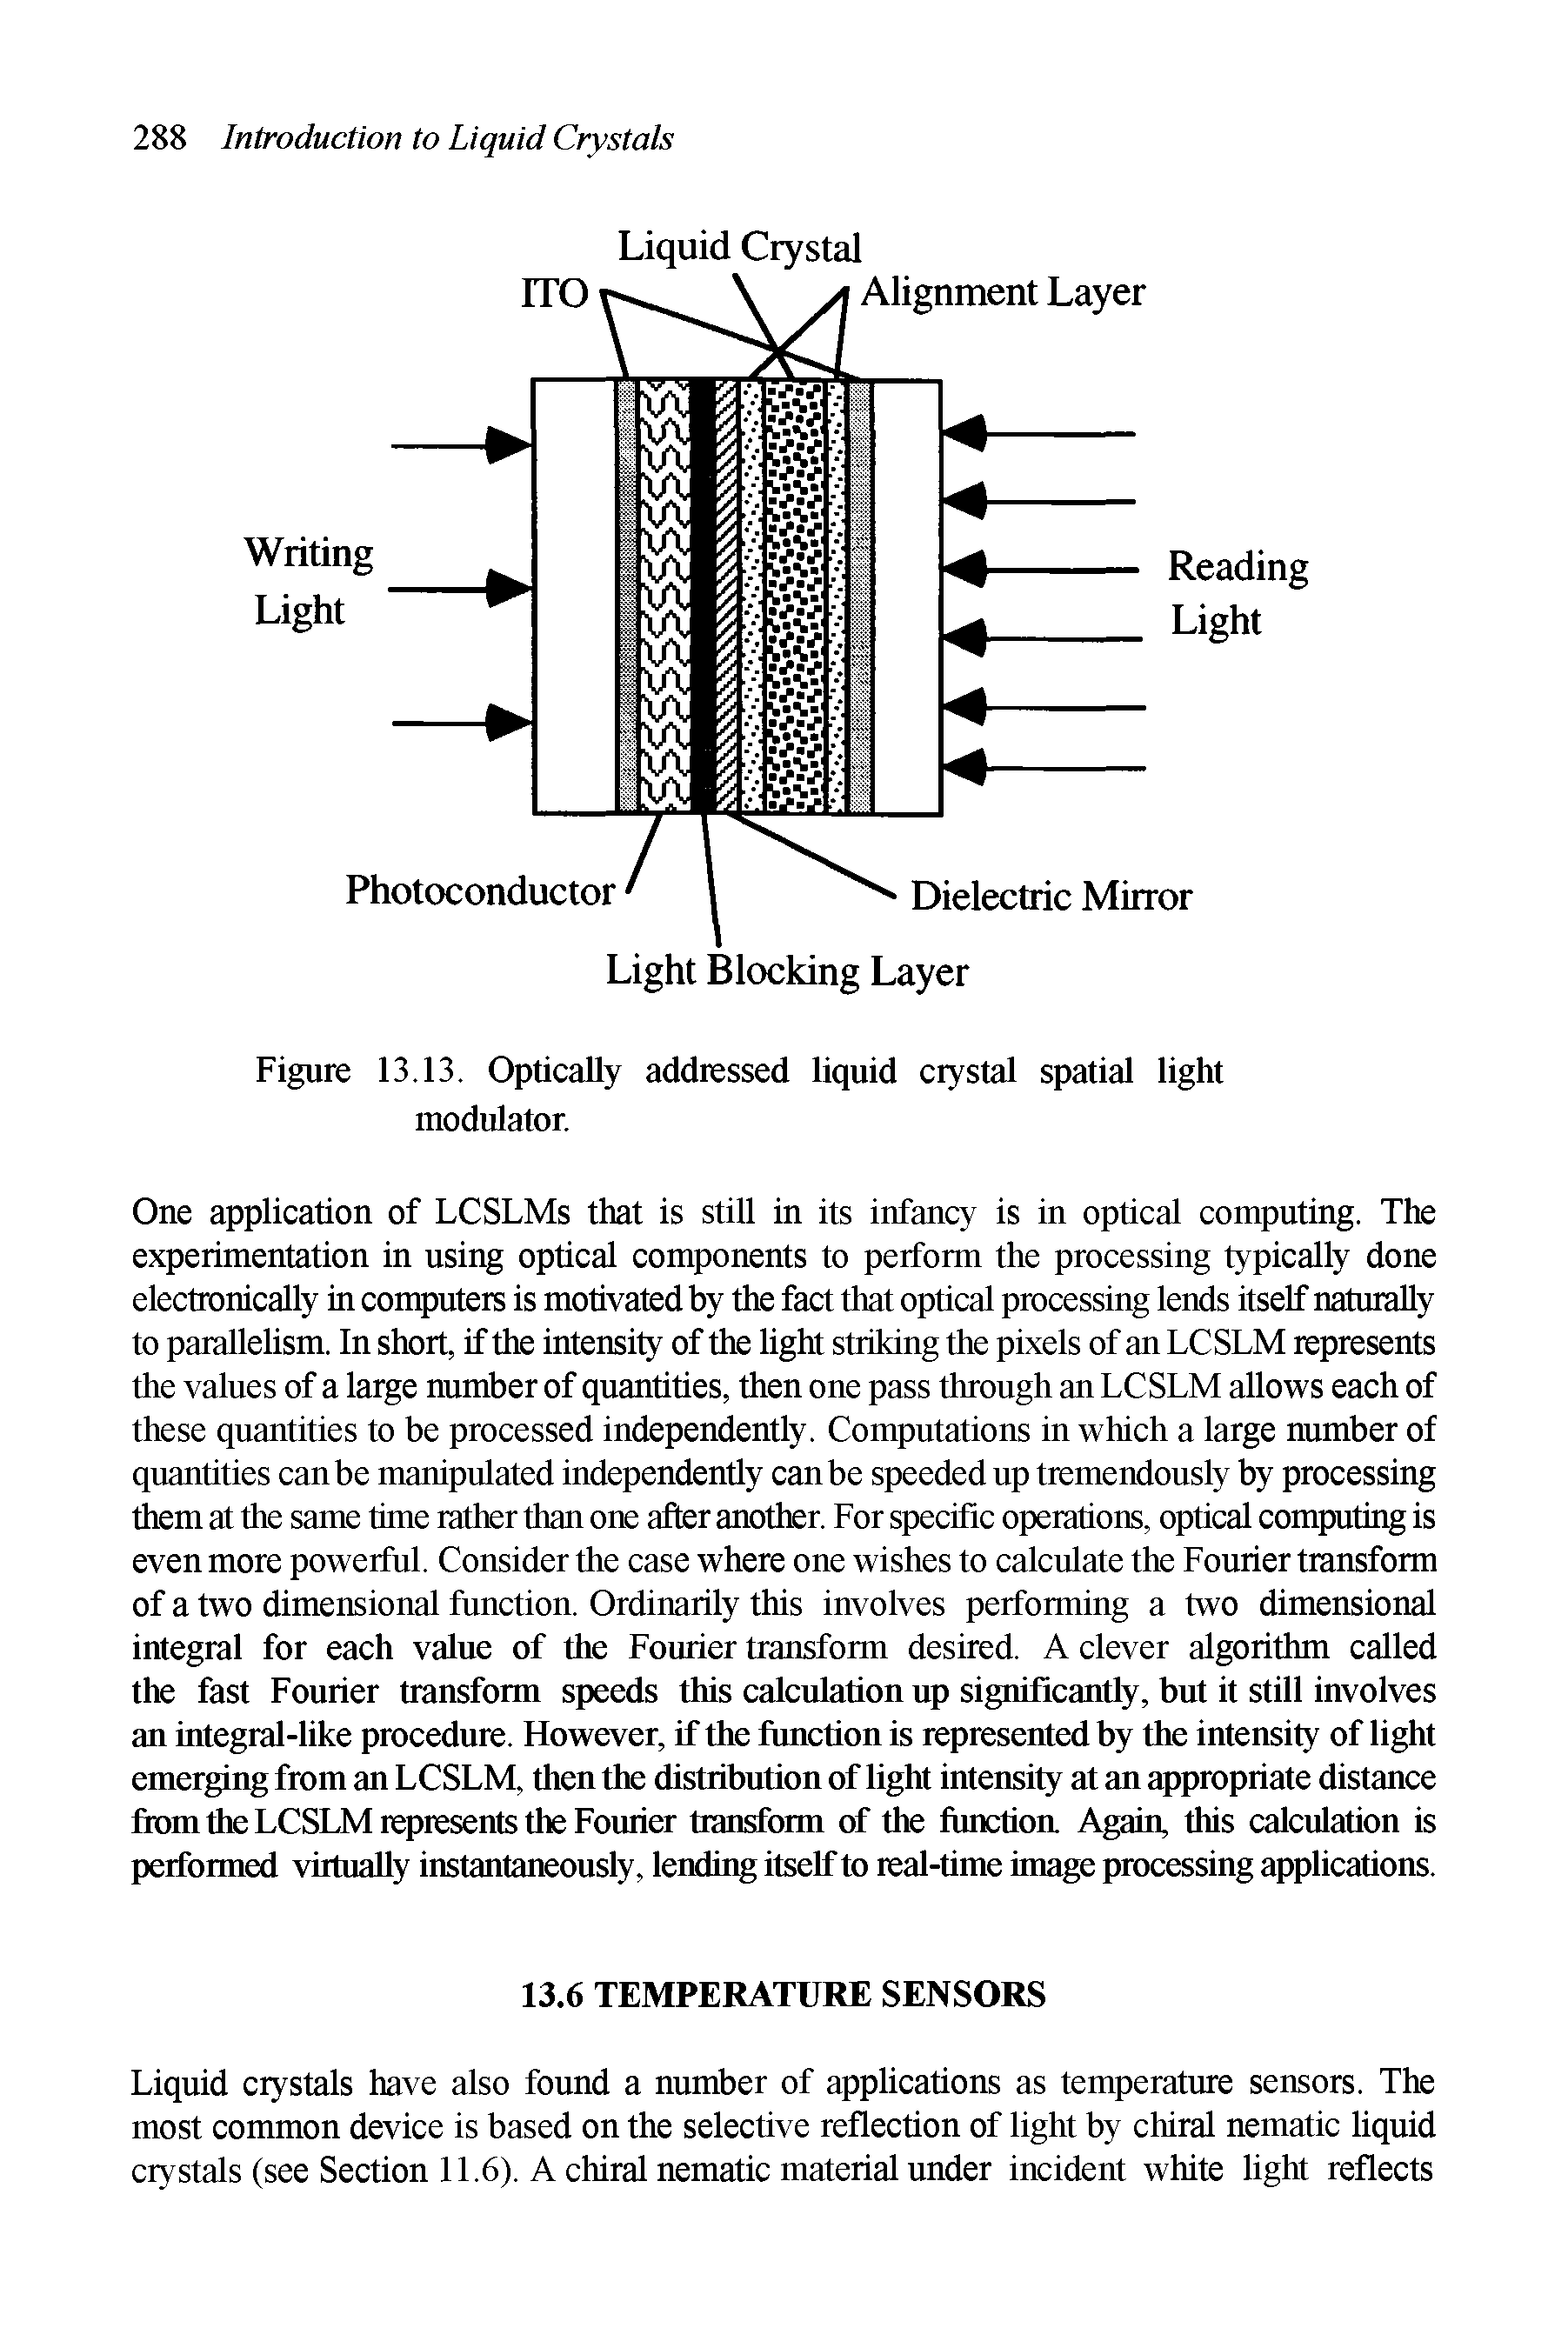 Figure 13.13. Optically addressed liquid crystal spatial light modulator.